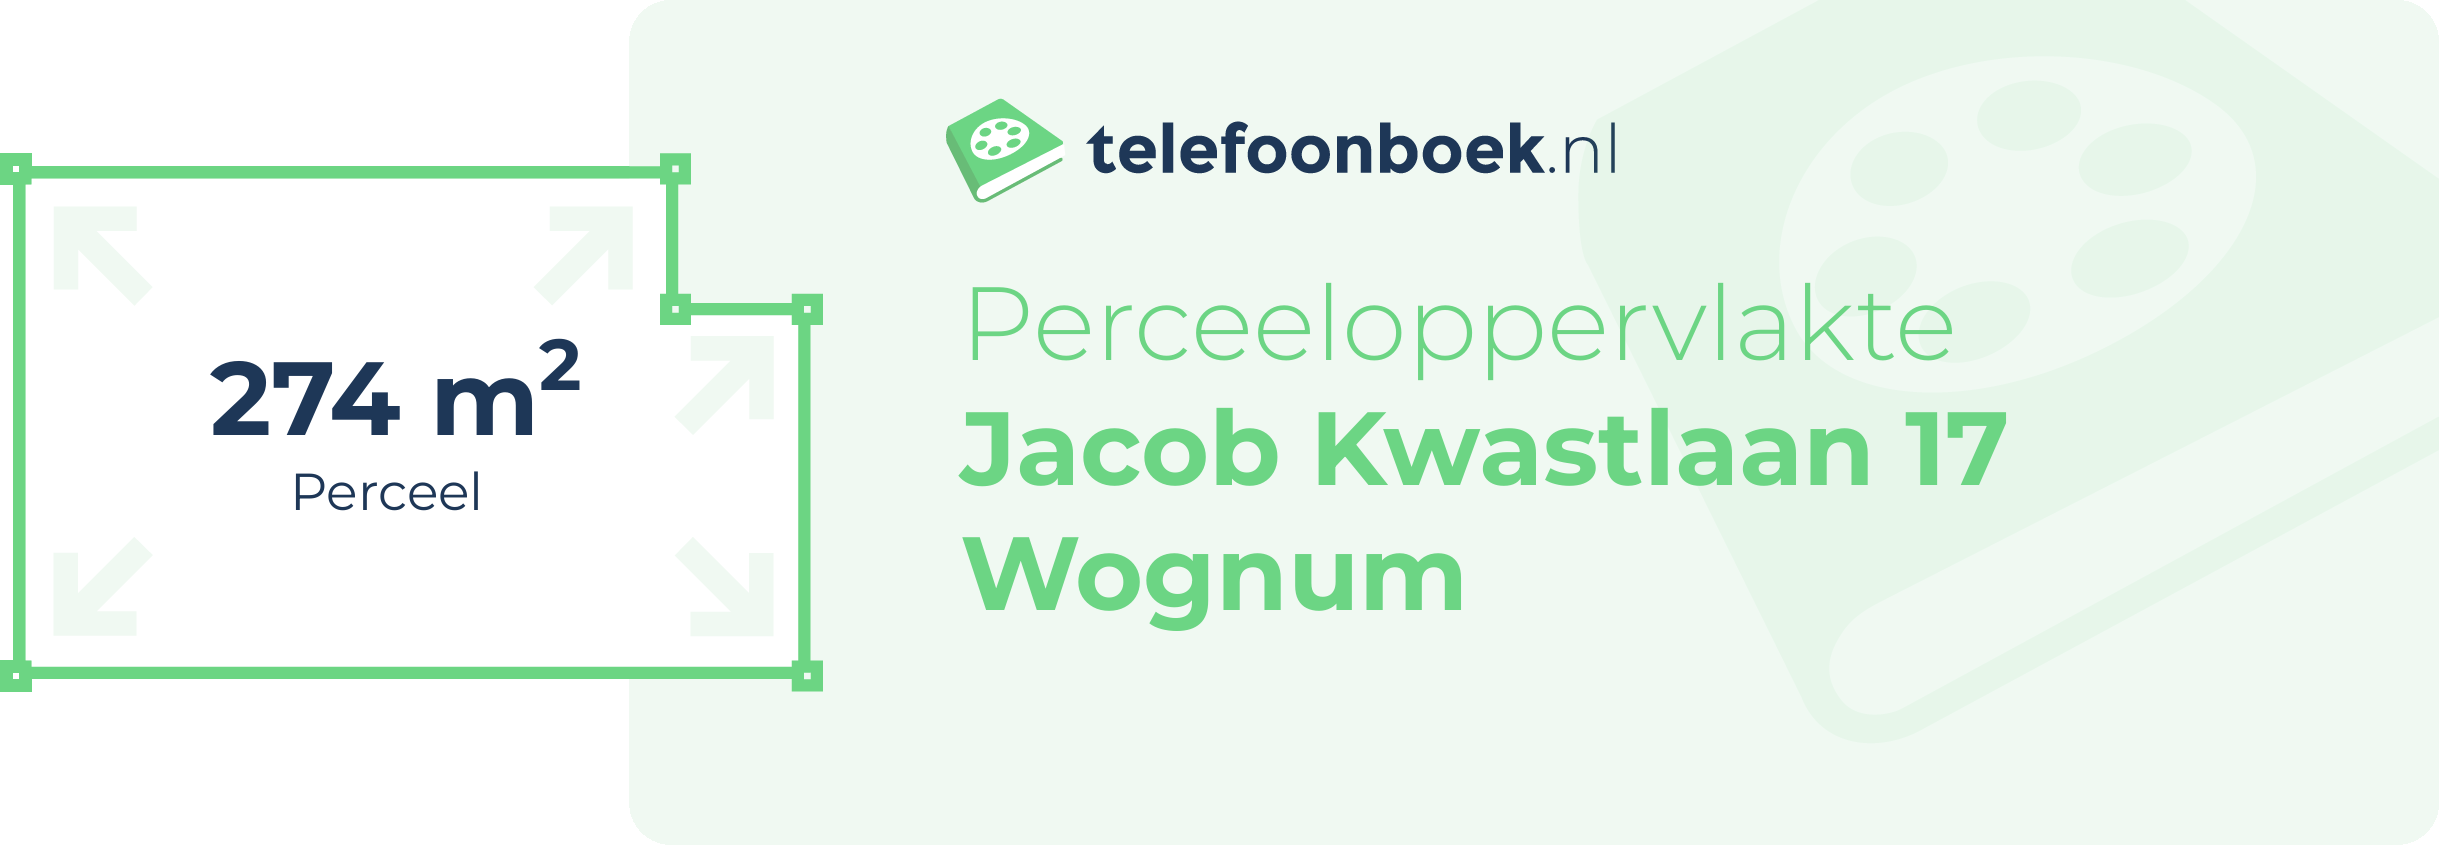 Perceeloppervlakte Jacob Kwastlaan 17 Wognum